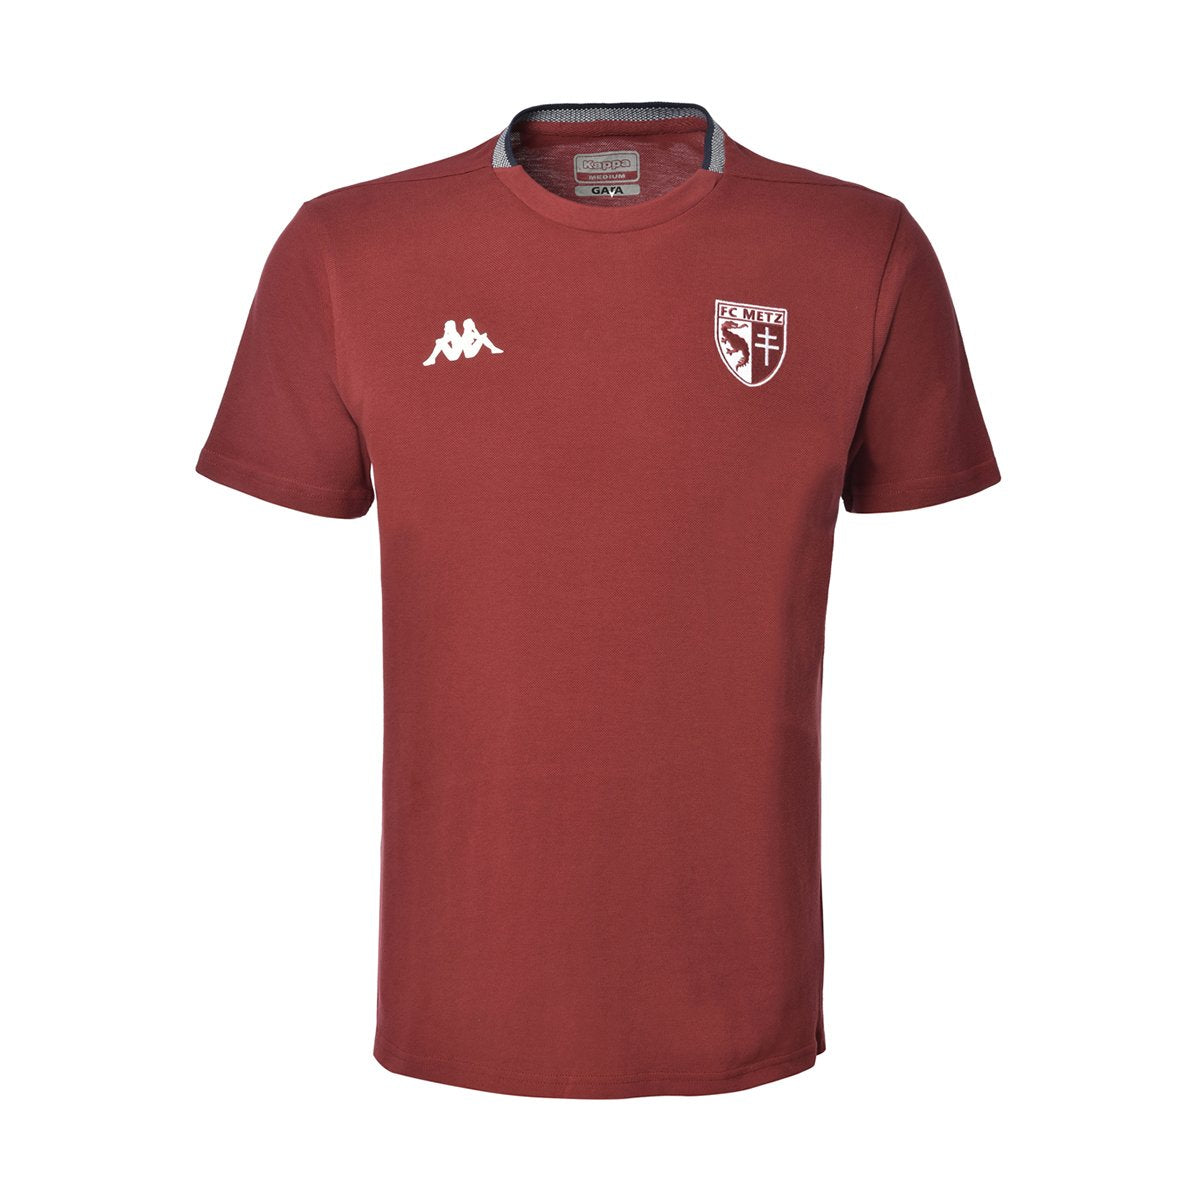 Camiseta Angelico Fc Metz Rojo Hombre - Imagen 1